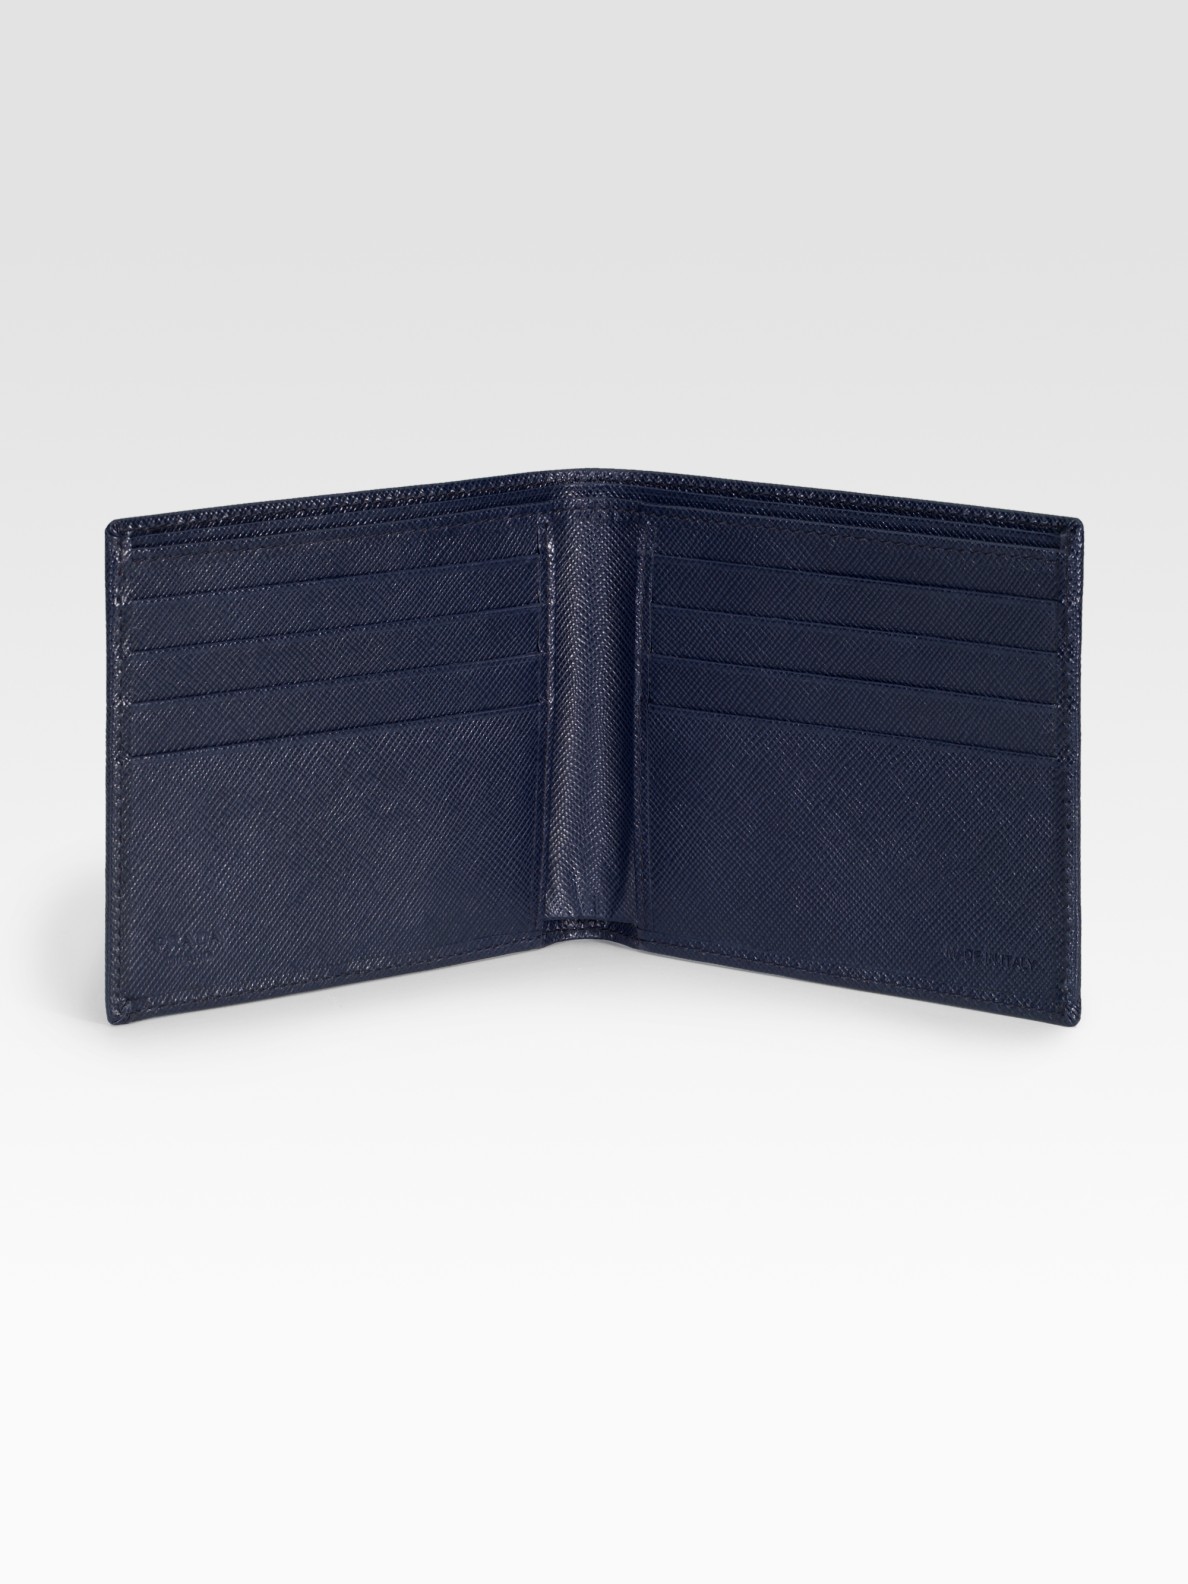 Prada Saffiano Leather Wallet in Black for Men | Lyst  